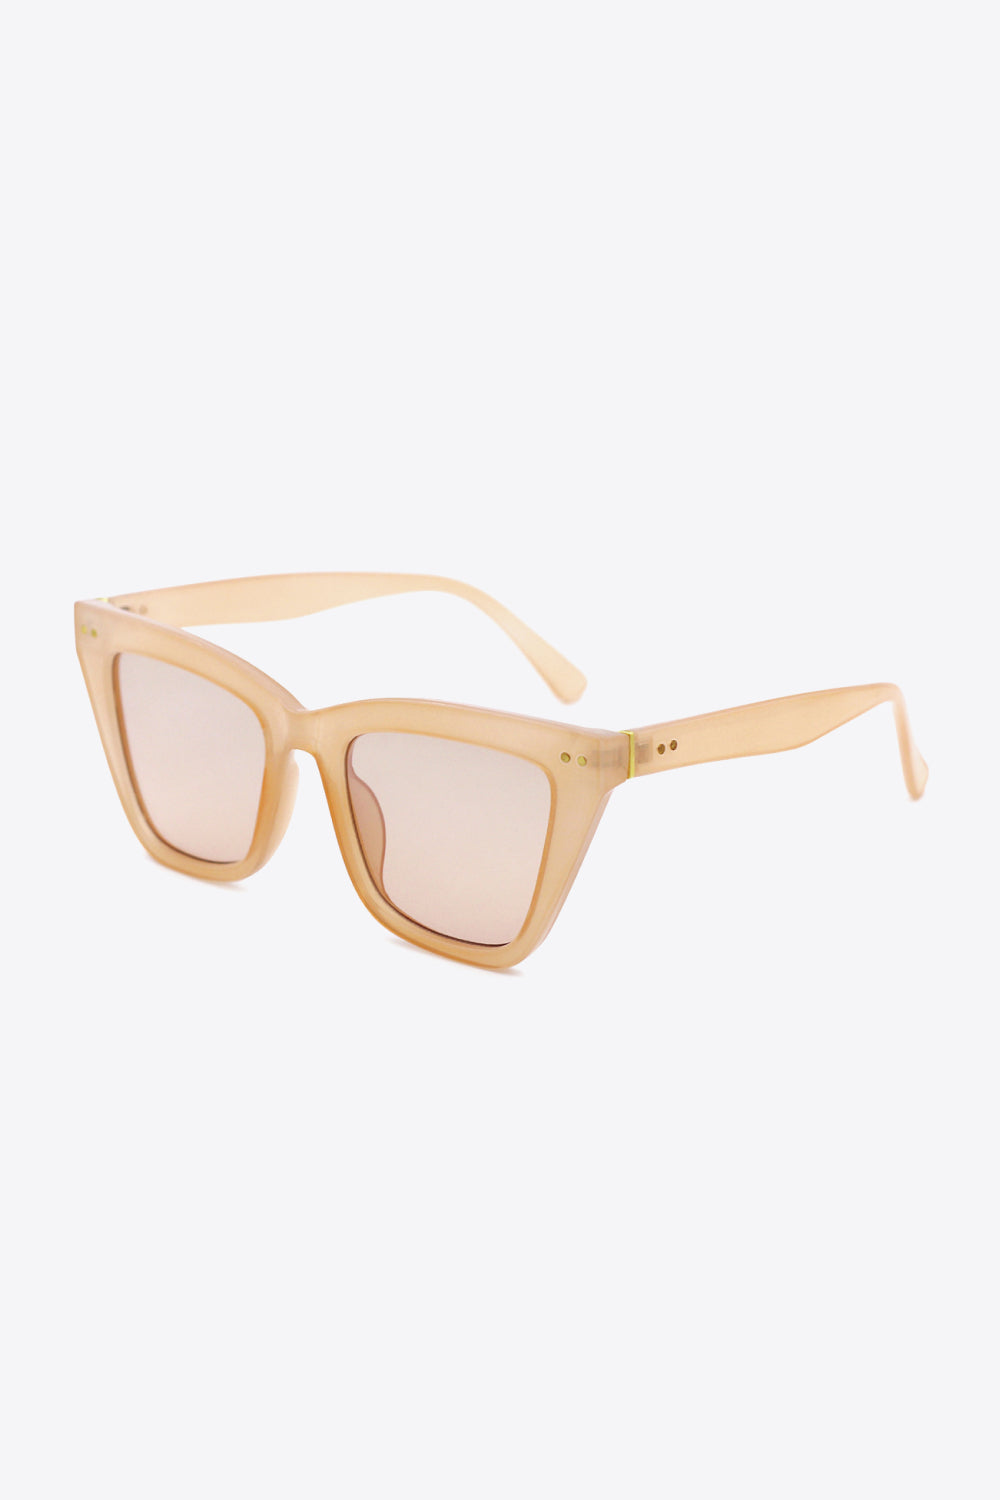 UV400 Polycarbonate Frame Sunglasses - Sunglasses - FITGGINS